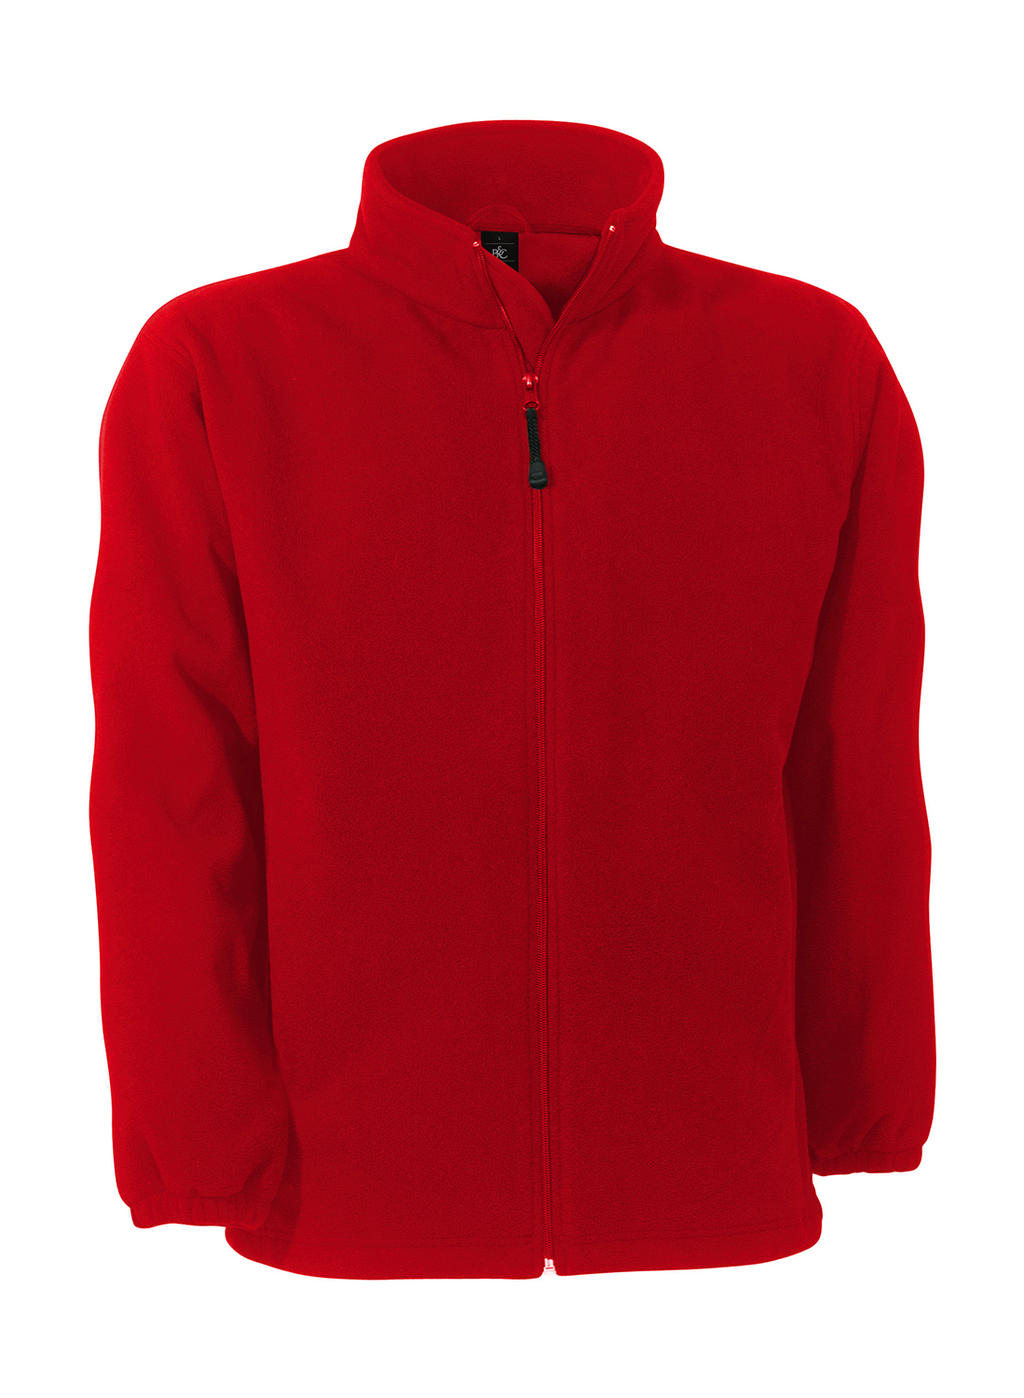  WindProtek Waterproof Fleece Jacket in Farbe Red